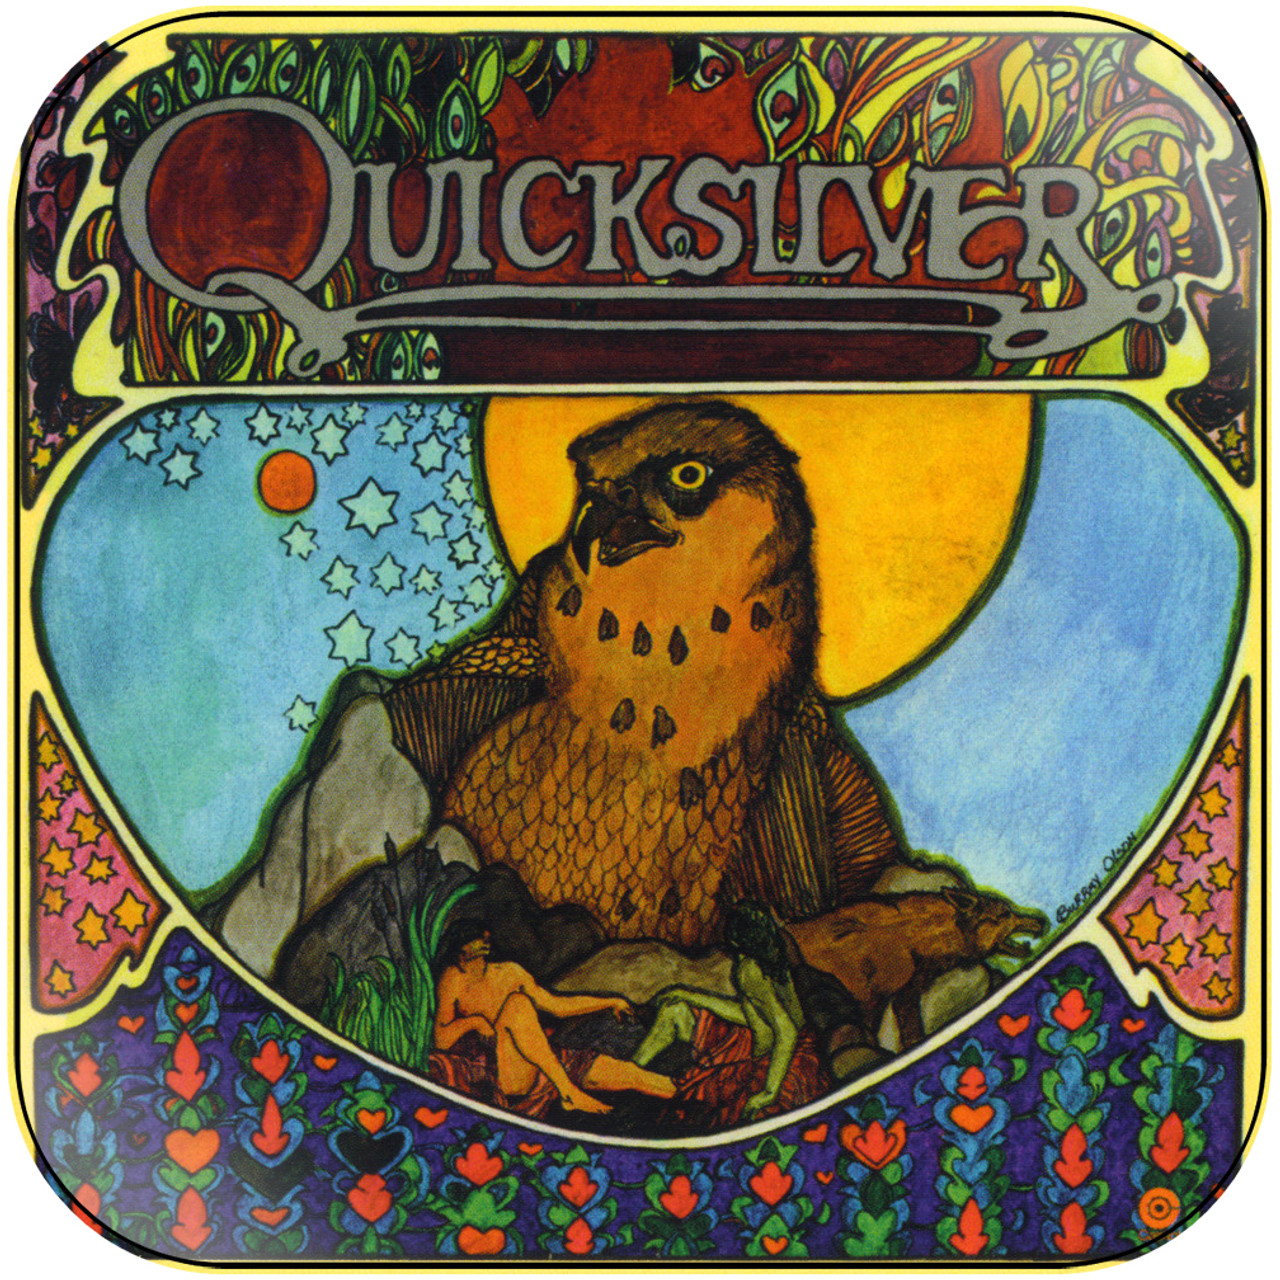 quicksilver-album-cover-sticker__67232.1539094938.jpg